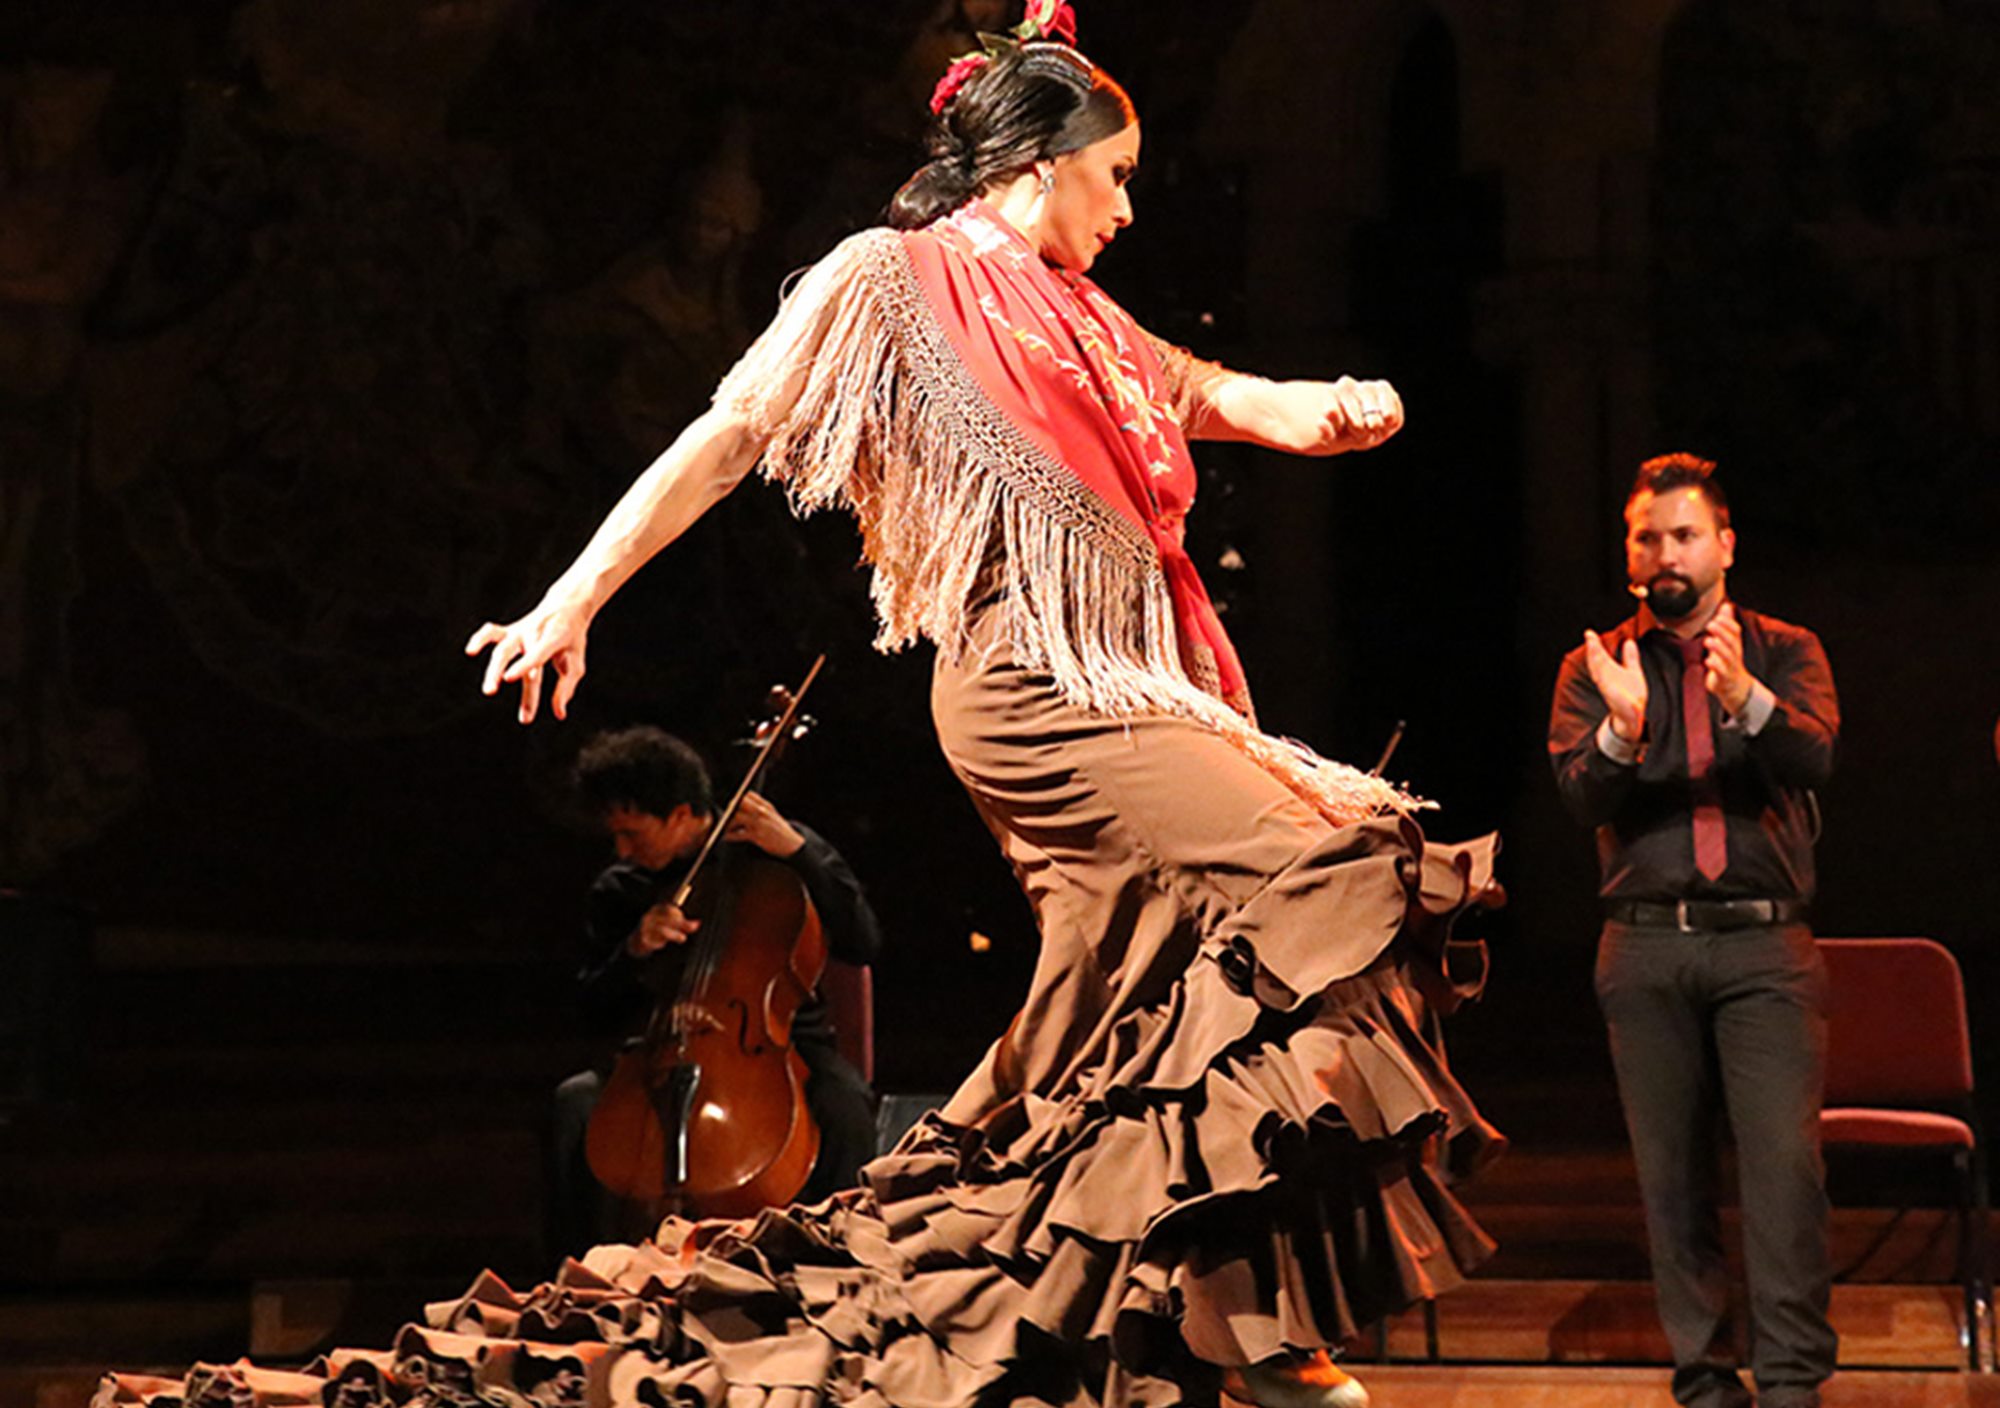 Opera & Flamenco show in Palau de la Música Catalana get buy tickets online visit spectacle